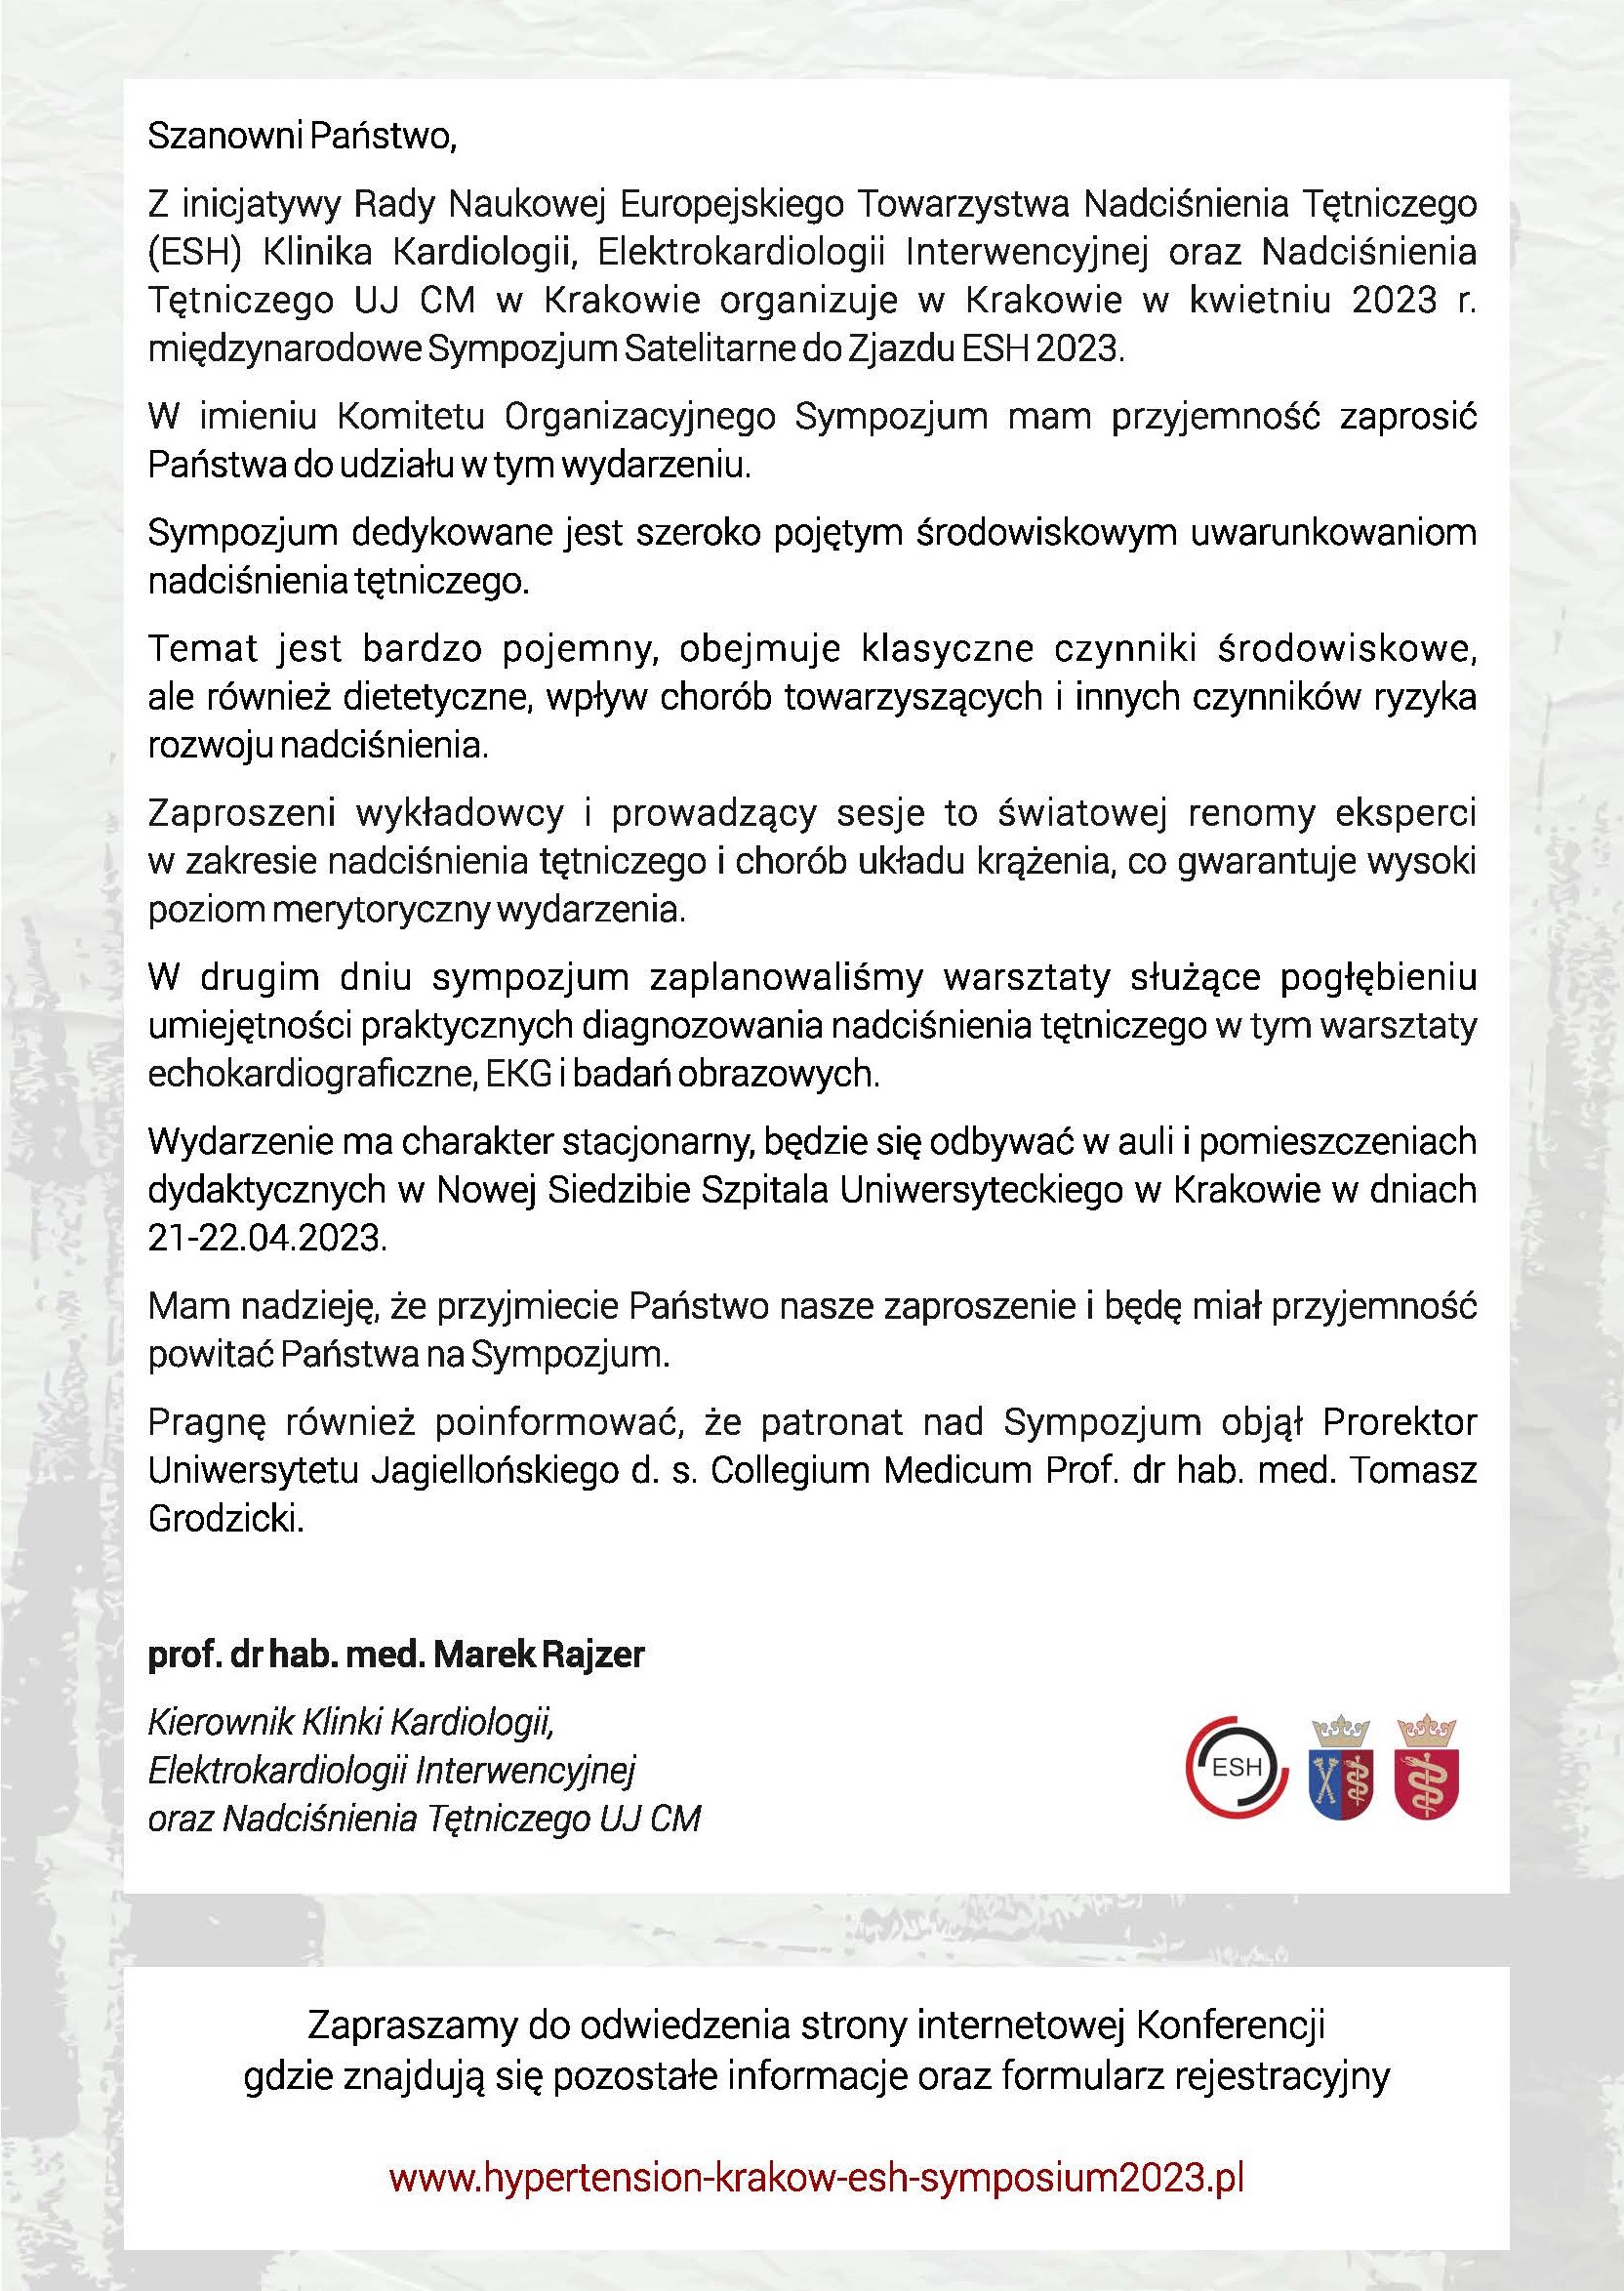 http://www.hypertension-krakow-esh-symposium2023.pl/